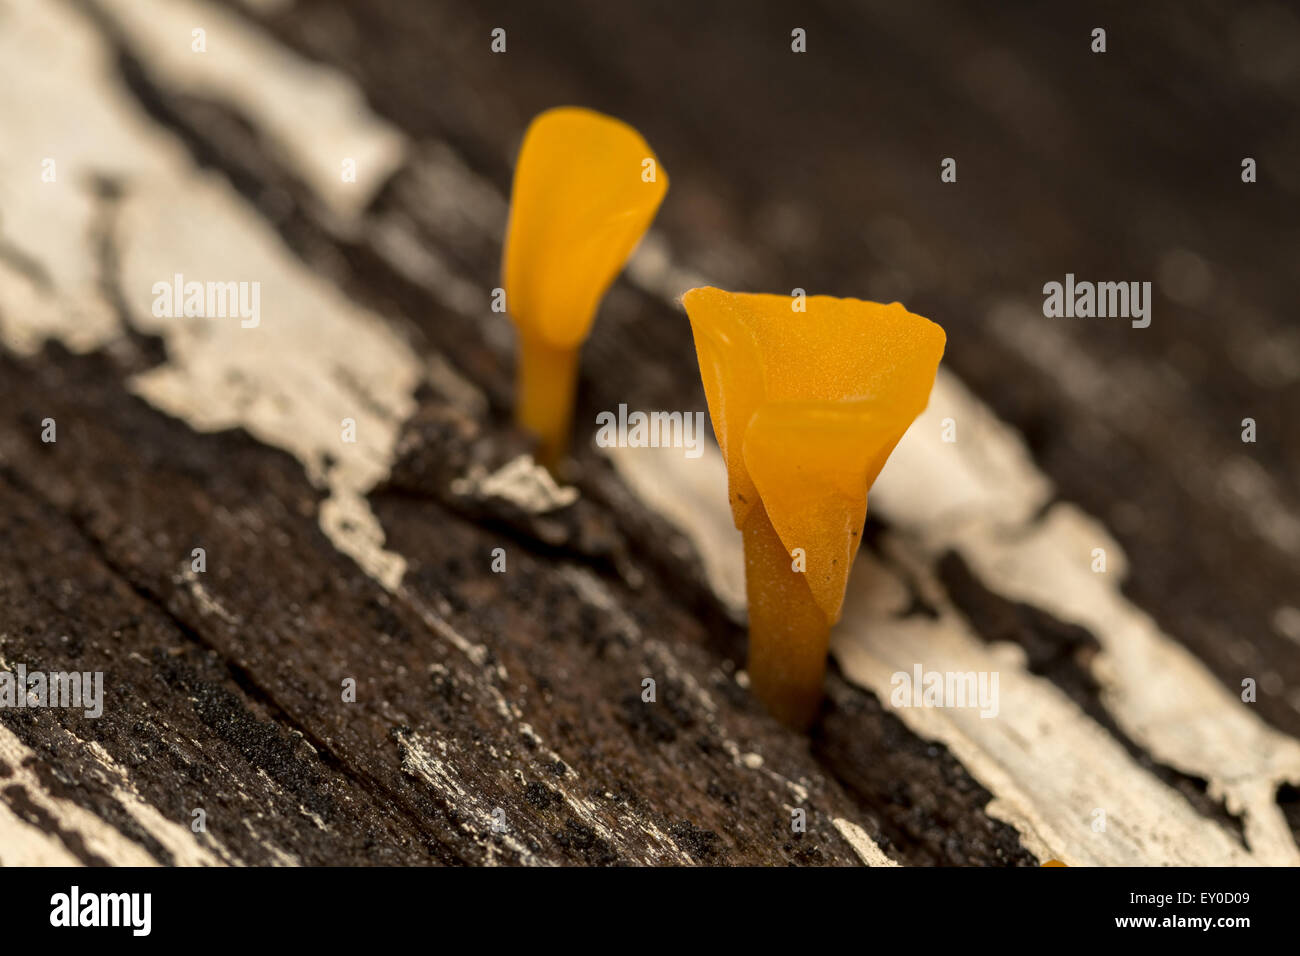 Mushrooms on dead log, Macro Photo Stock Photo